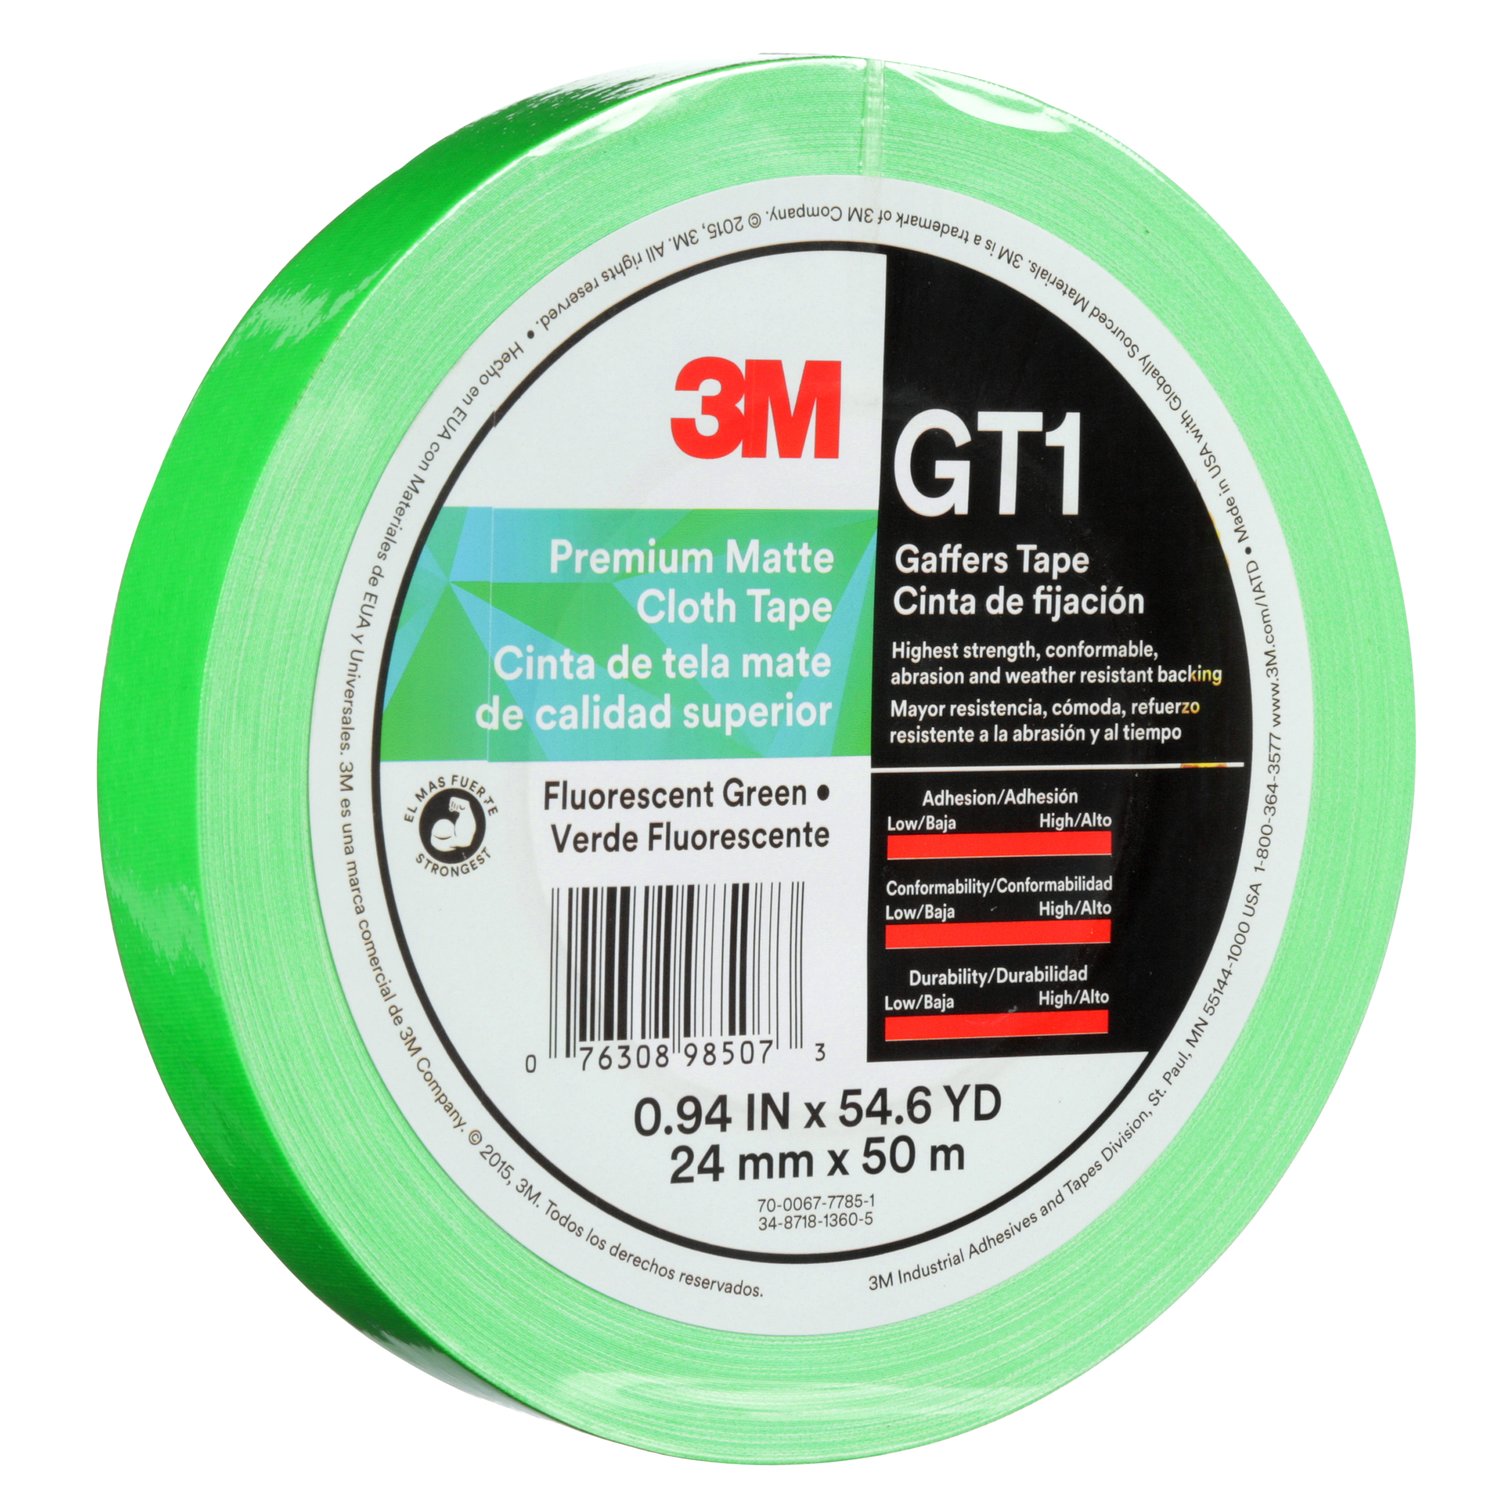 7010336130 - 3M Premium Matte Cloth (Gaffers) Tape GT1, Fluorescent Green, 24 mm x
50 m, 11 mil, 48/Case